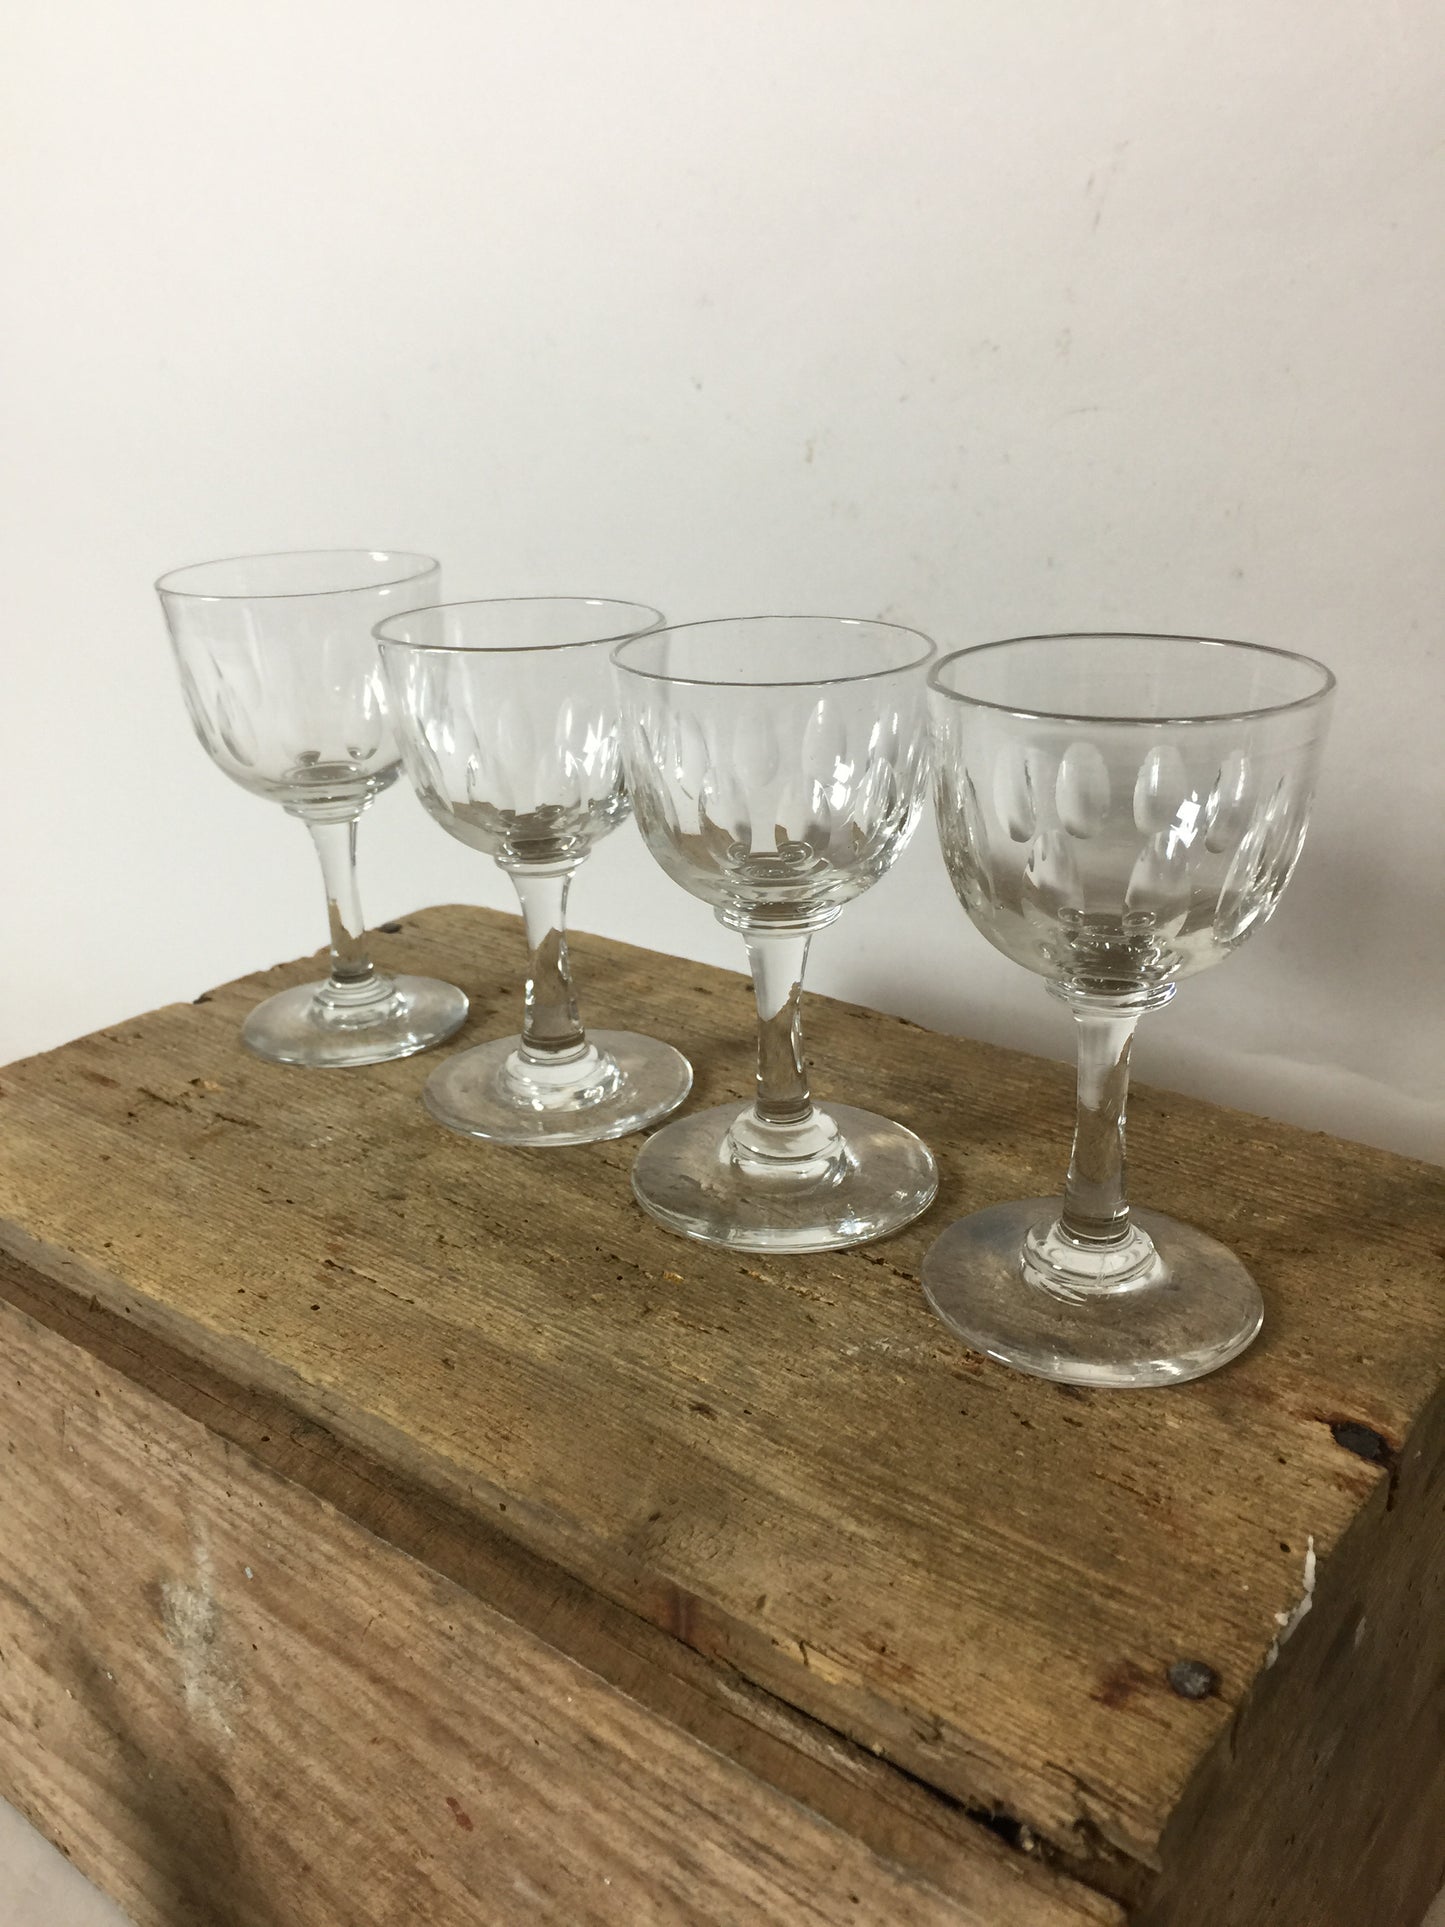 Fire smukke gamle glas